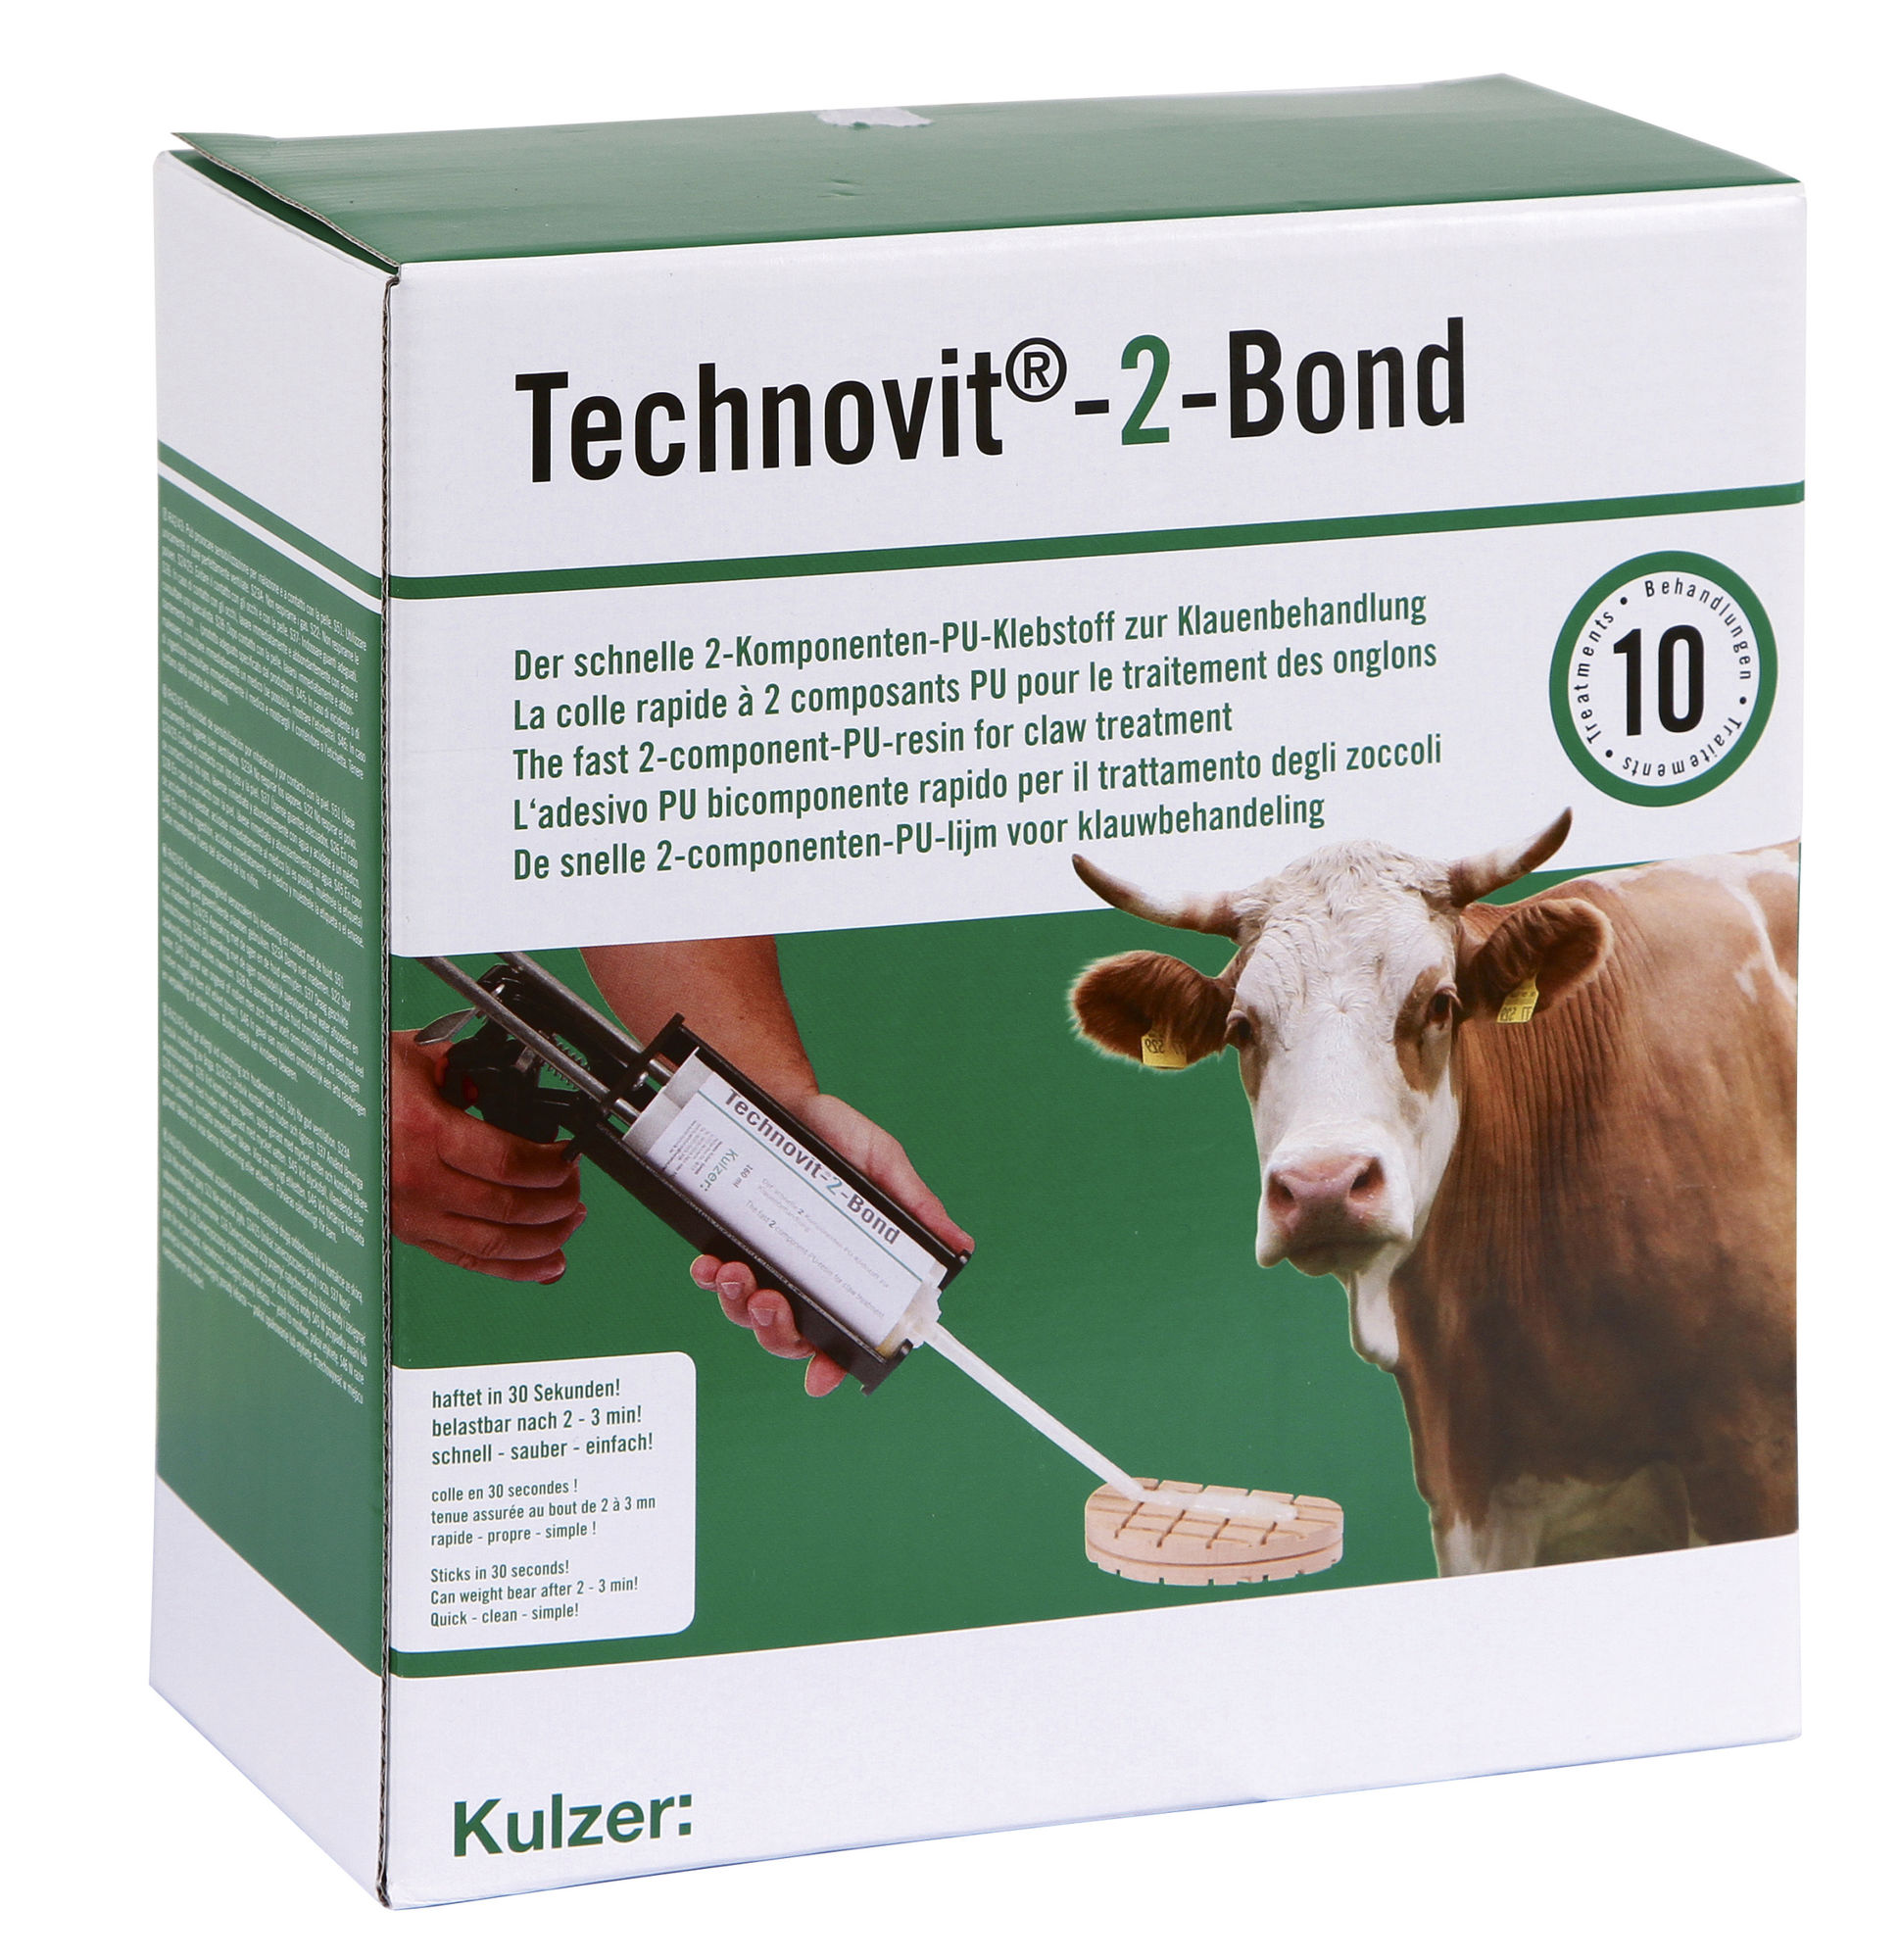 Technovit-2-Bond Starterset mit Dosierpistole